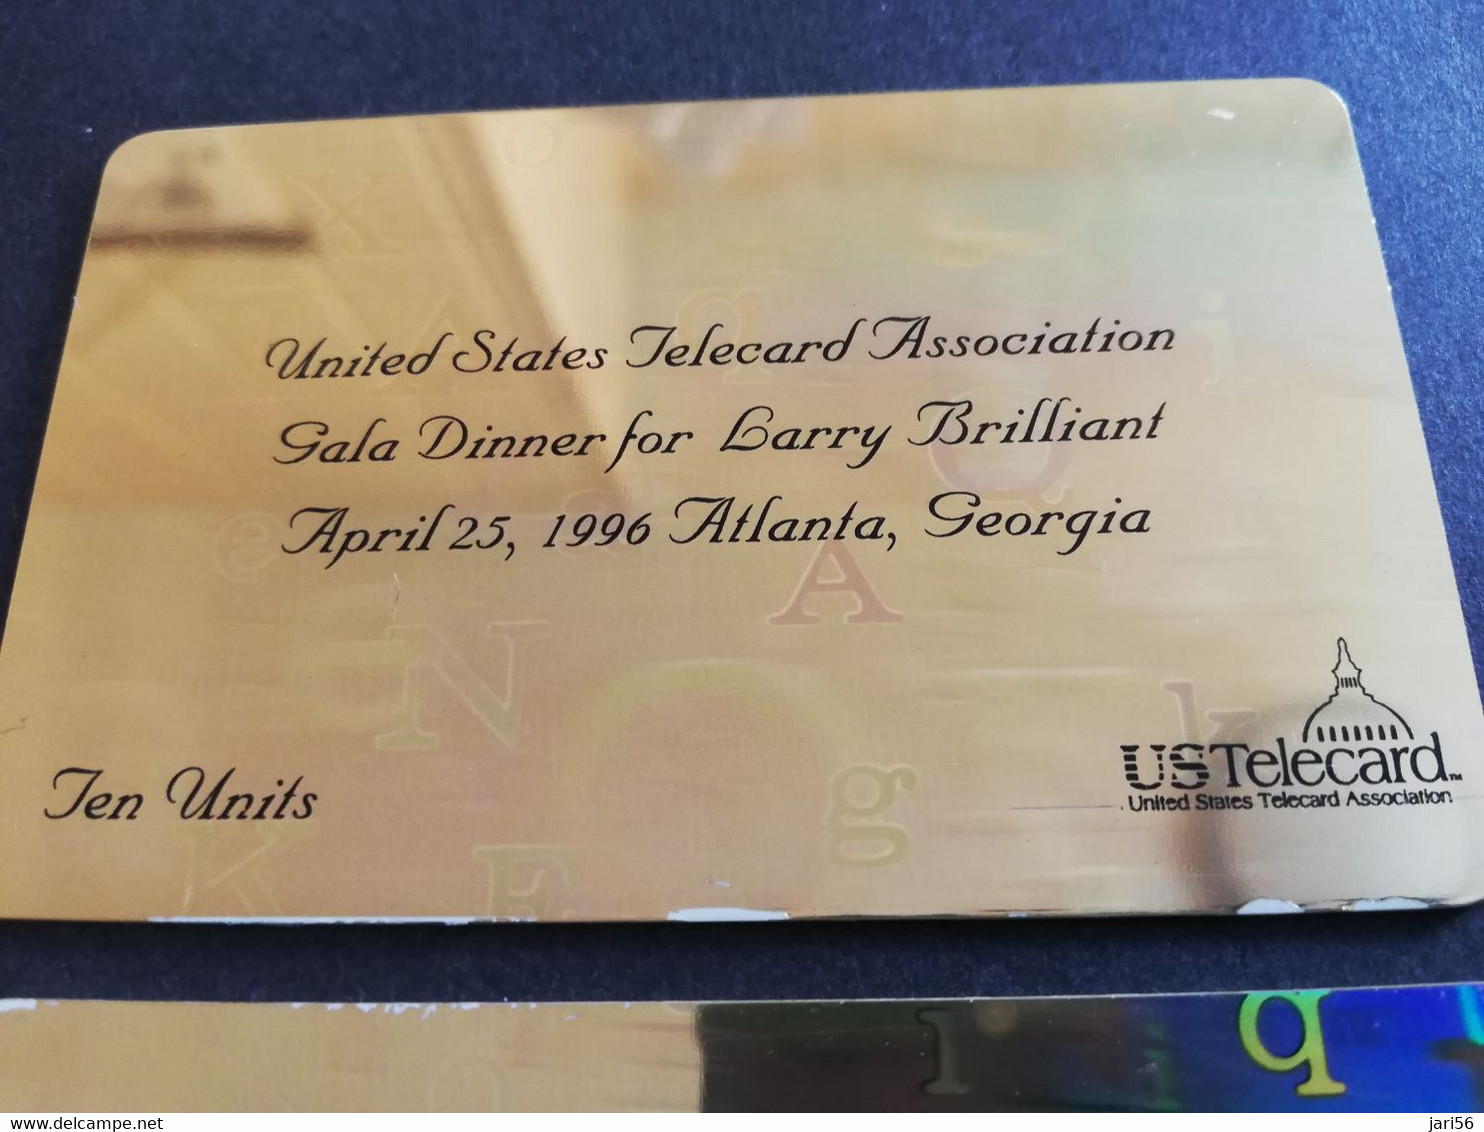 UNITED STATES  US TELECARD/ GALA DINER FOR LARRY BRILLIANT - GOLD  CARD/ HOLOGRA   LIMITED EDITION   MINT CARD ** 6117** - Sammlungen